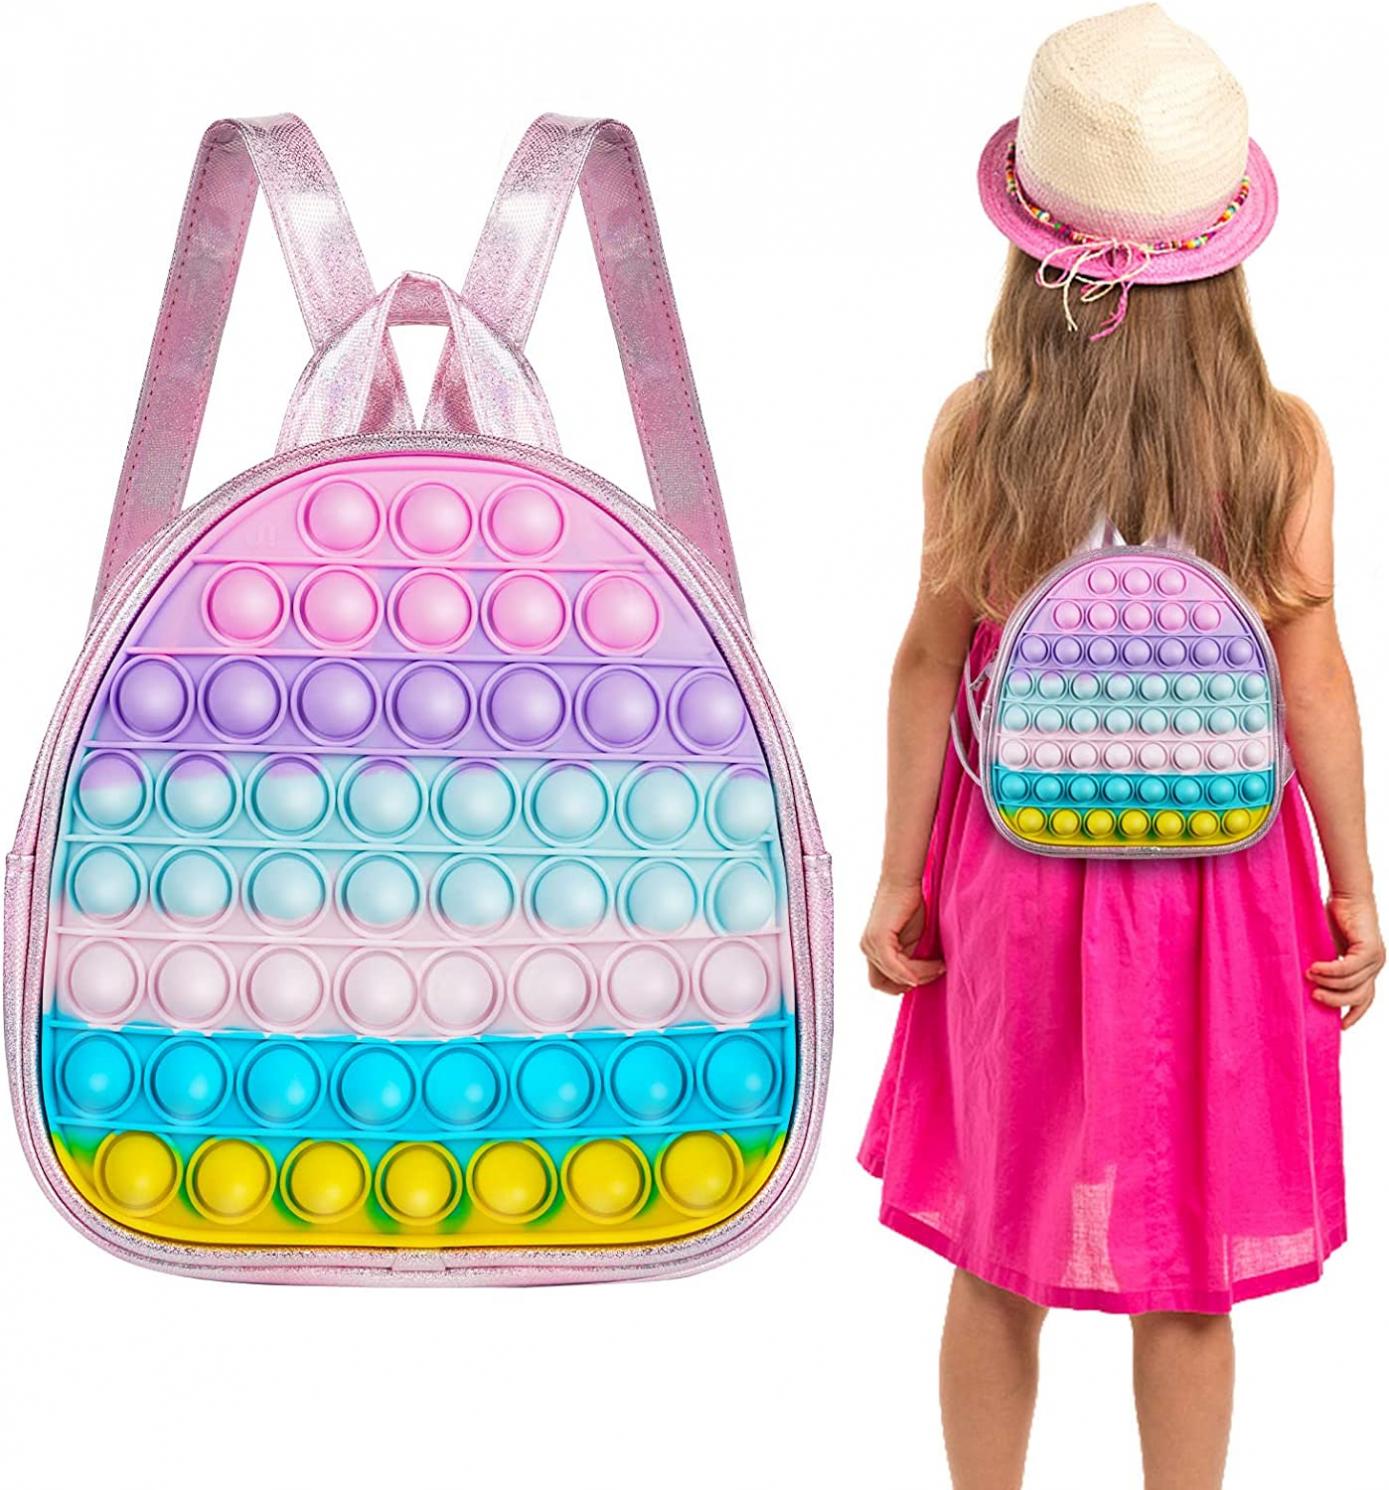 Vanblue Pop Purse Bag Fidget for Girls Rainbow Cloud Pop Purse Popper Bubbles Fidget Toy Anxiety Sensory Fidget Toy,Fidget Toys Birthday Party Fidgets Gifts for Girls